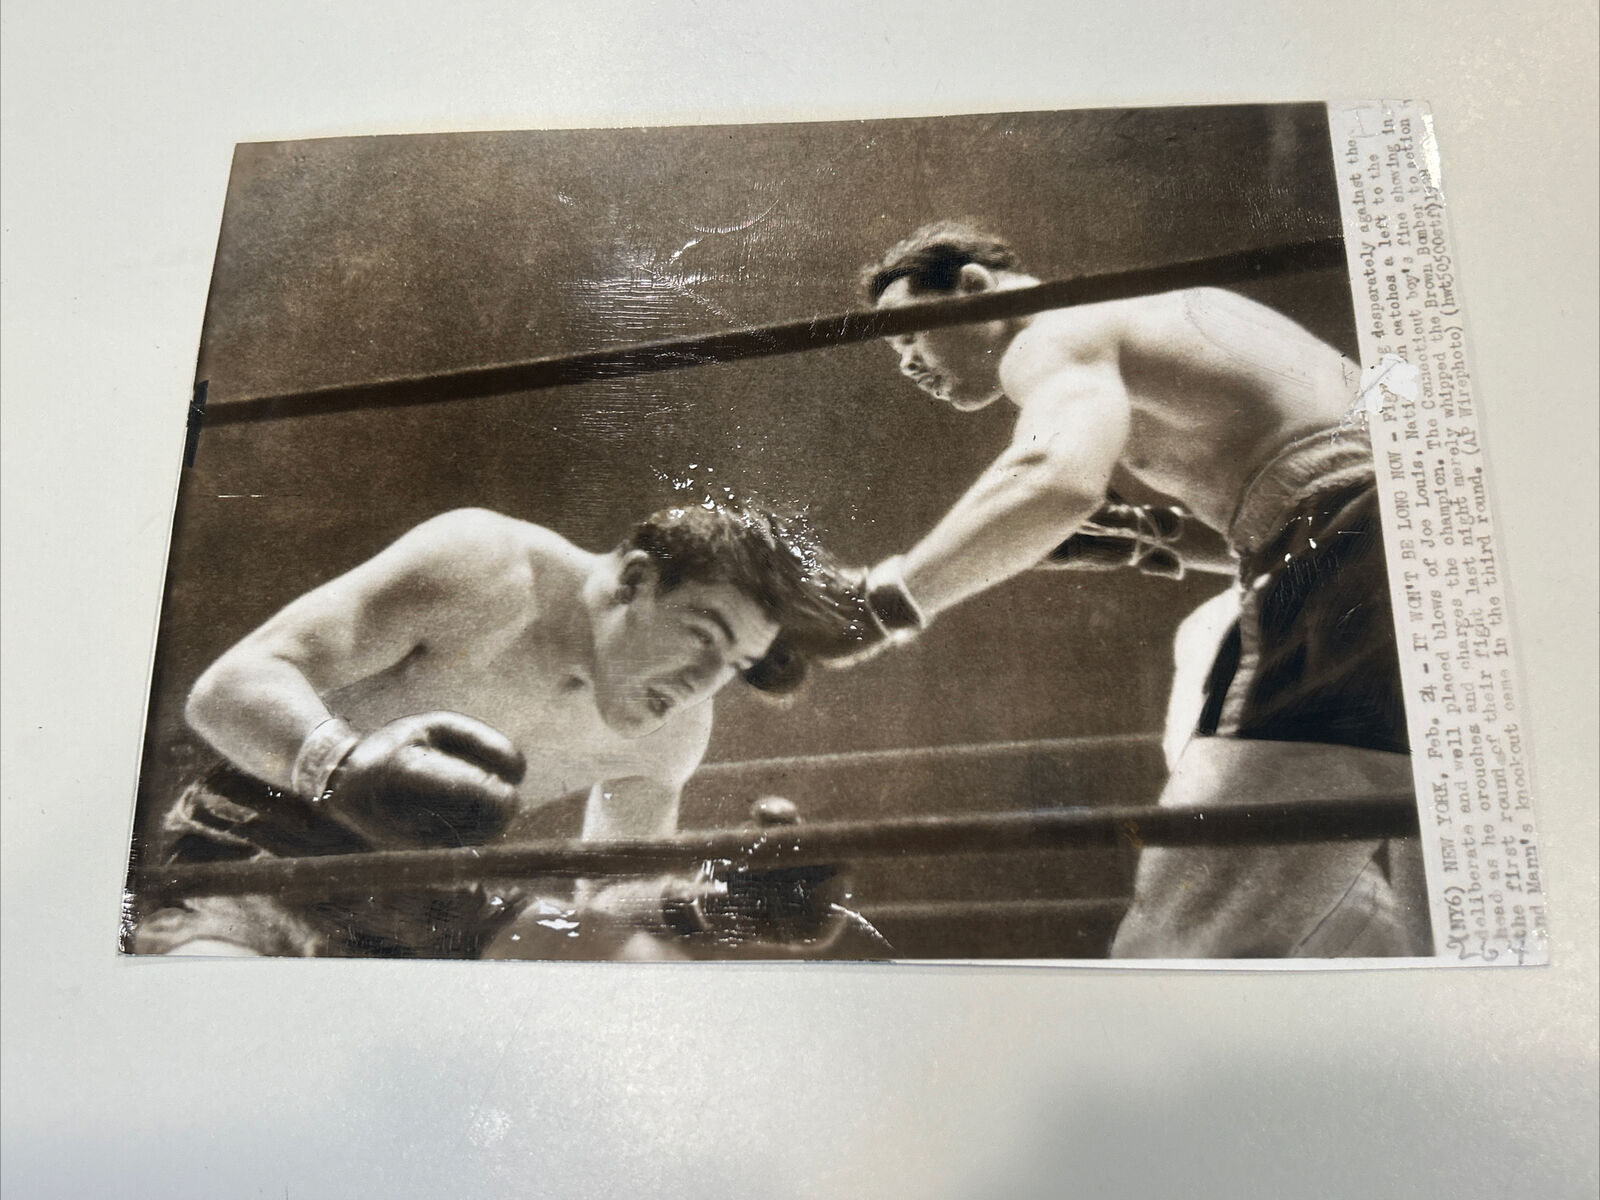 1938 Press Photo Heavyweight Boxer Joe Louis Versus Nathan Mann